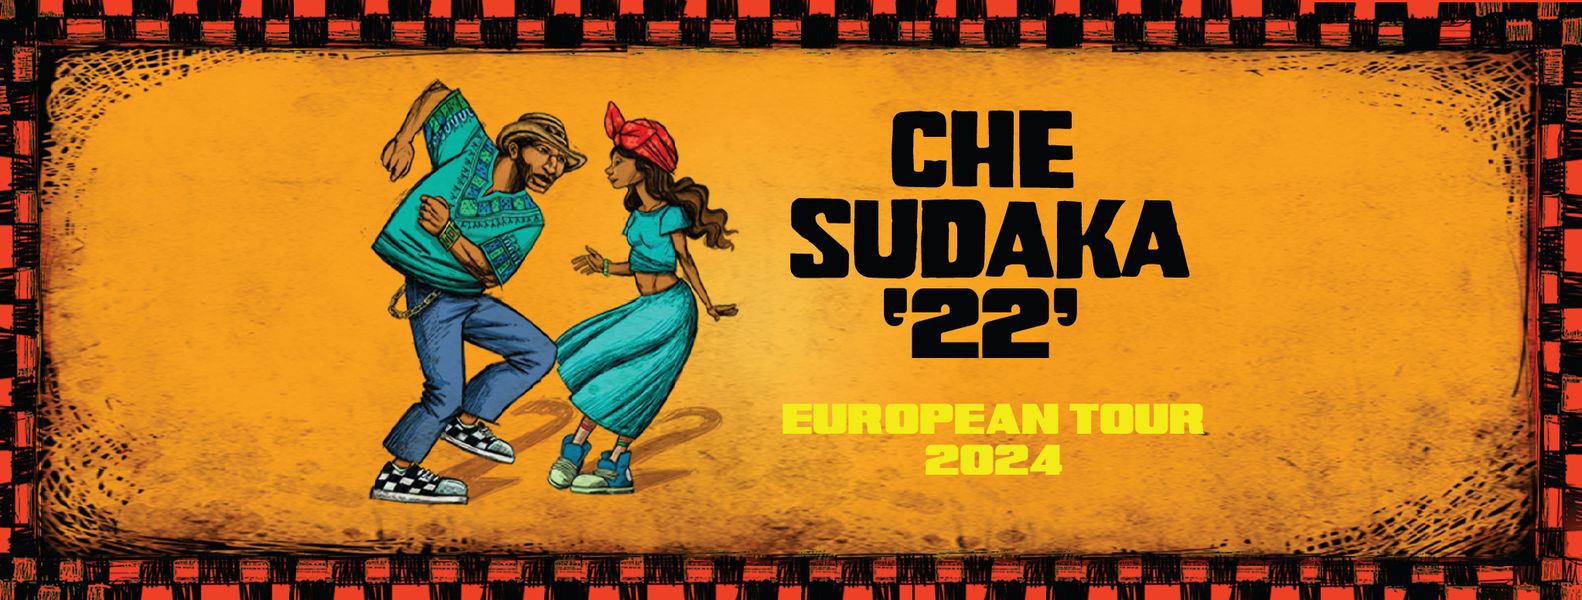 Che Sudaka // European Tour 2024 // 21.01.2023